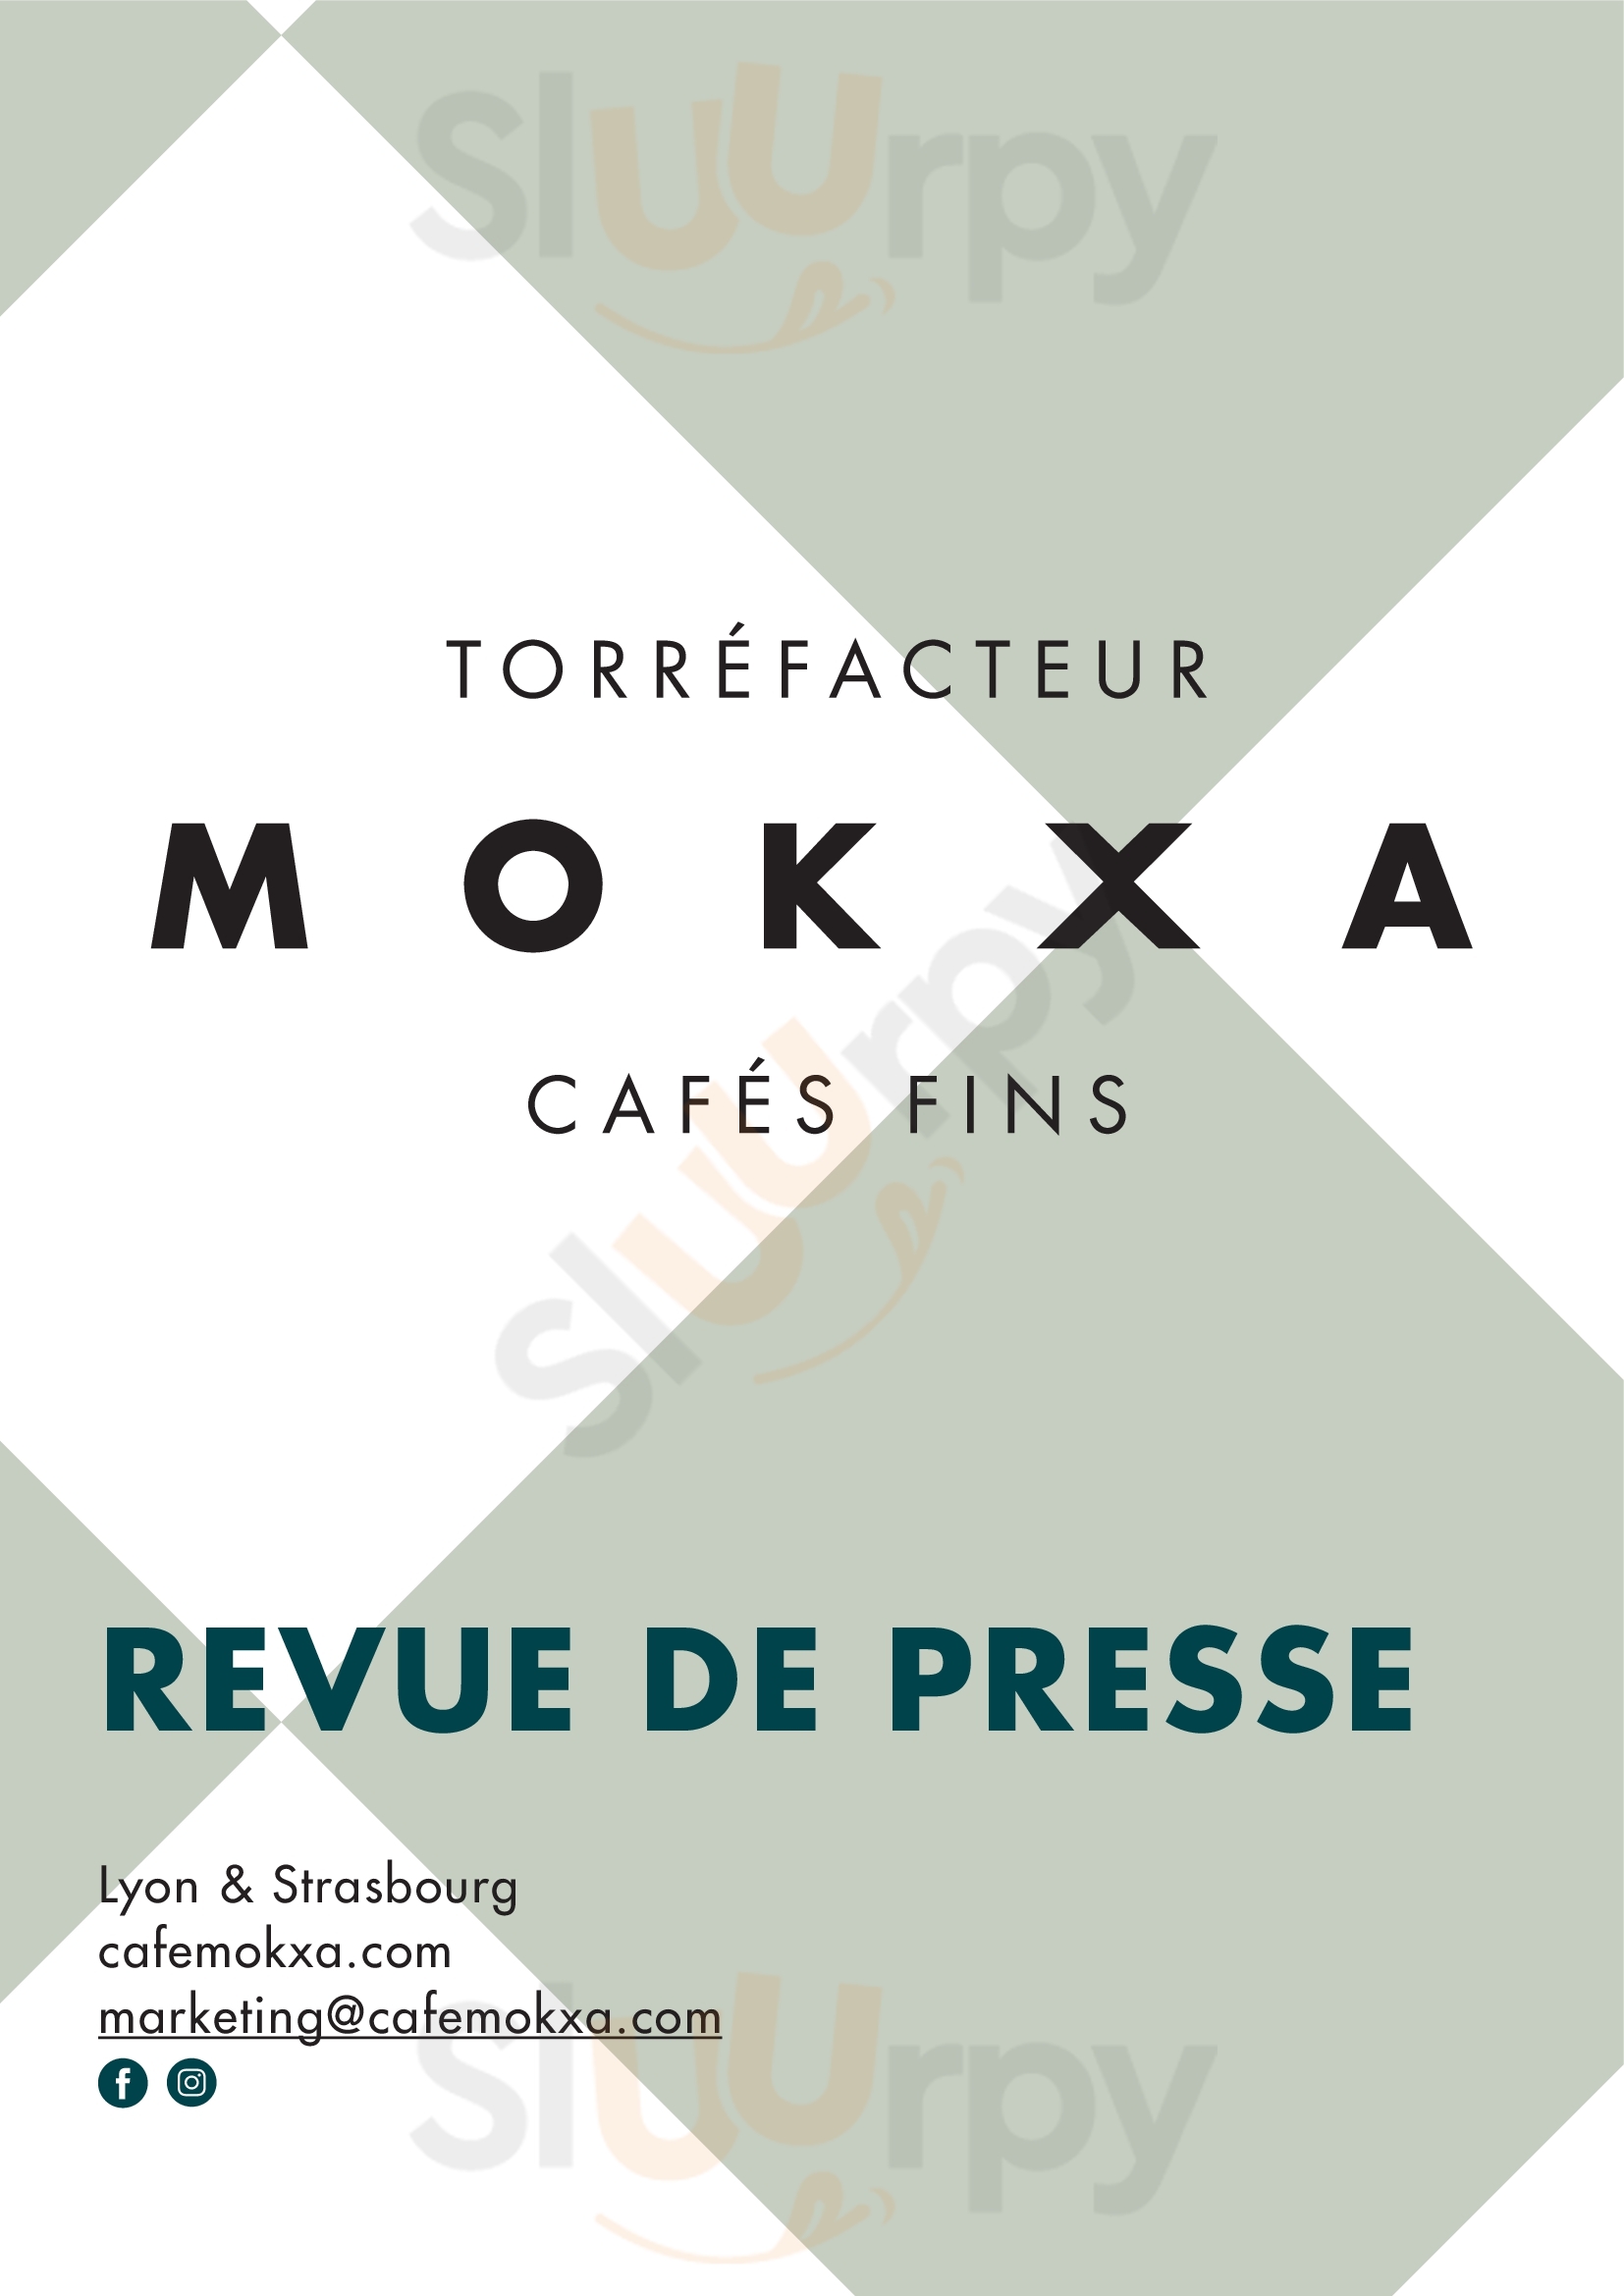 Boutique Mokxa Grand HÔtel-dieu Lyon Menu - 1